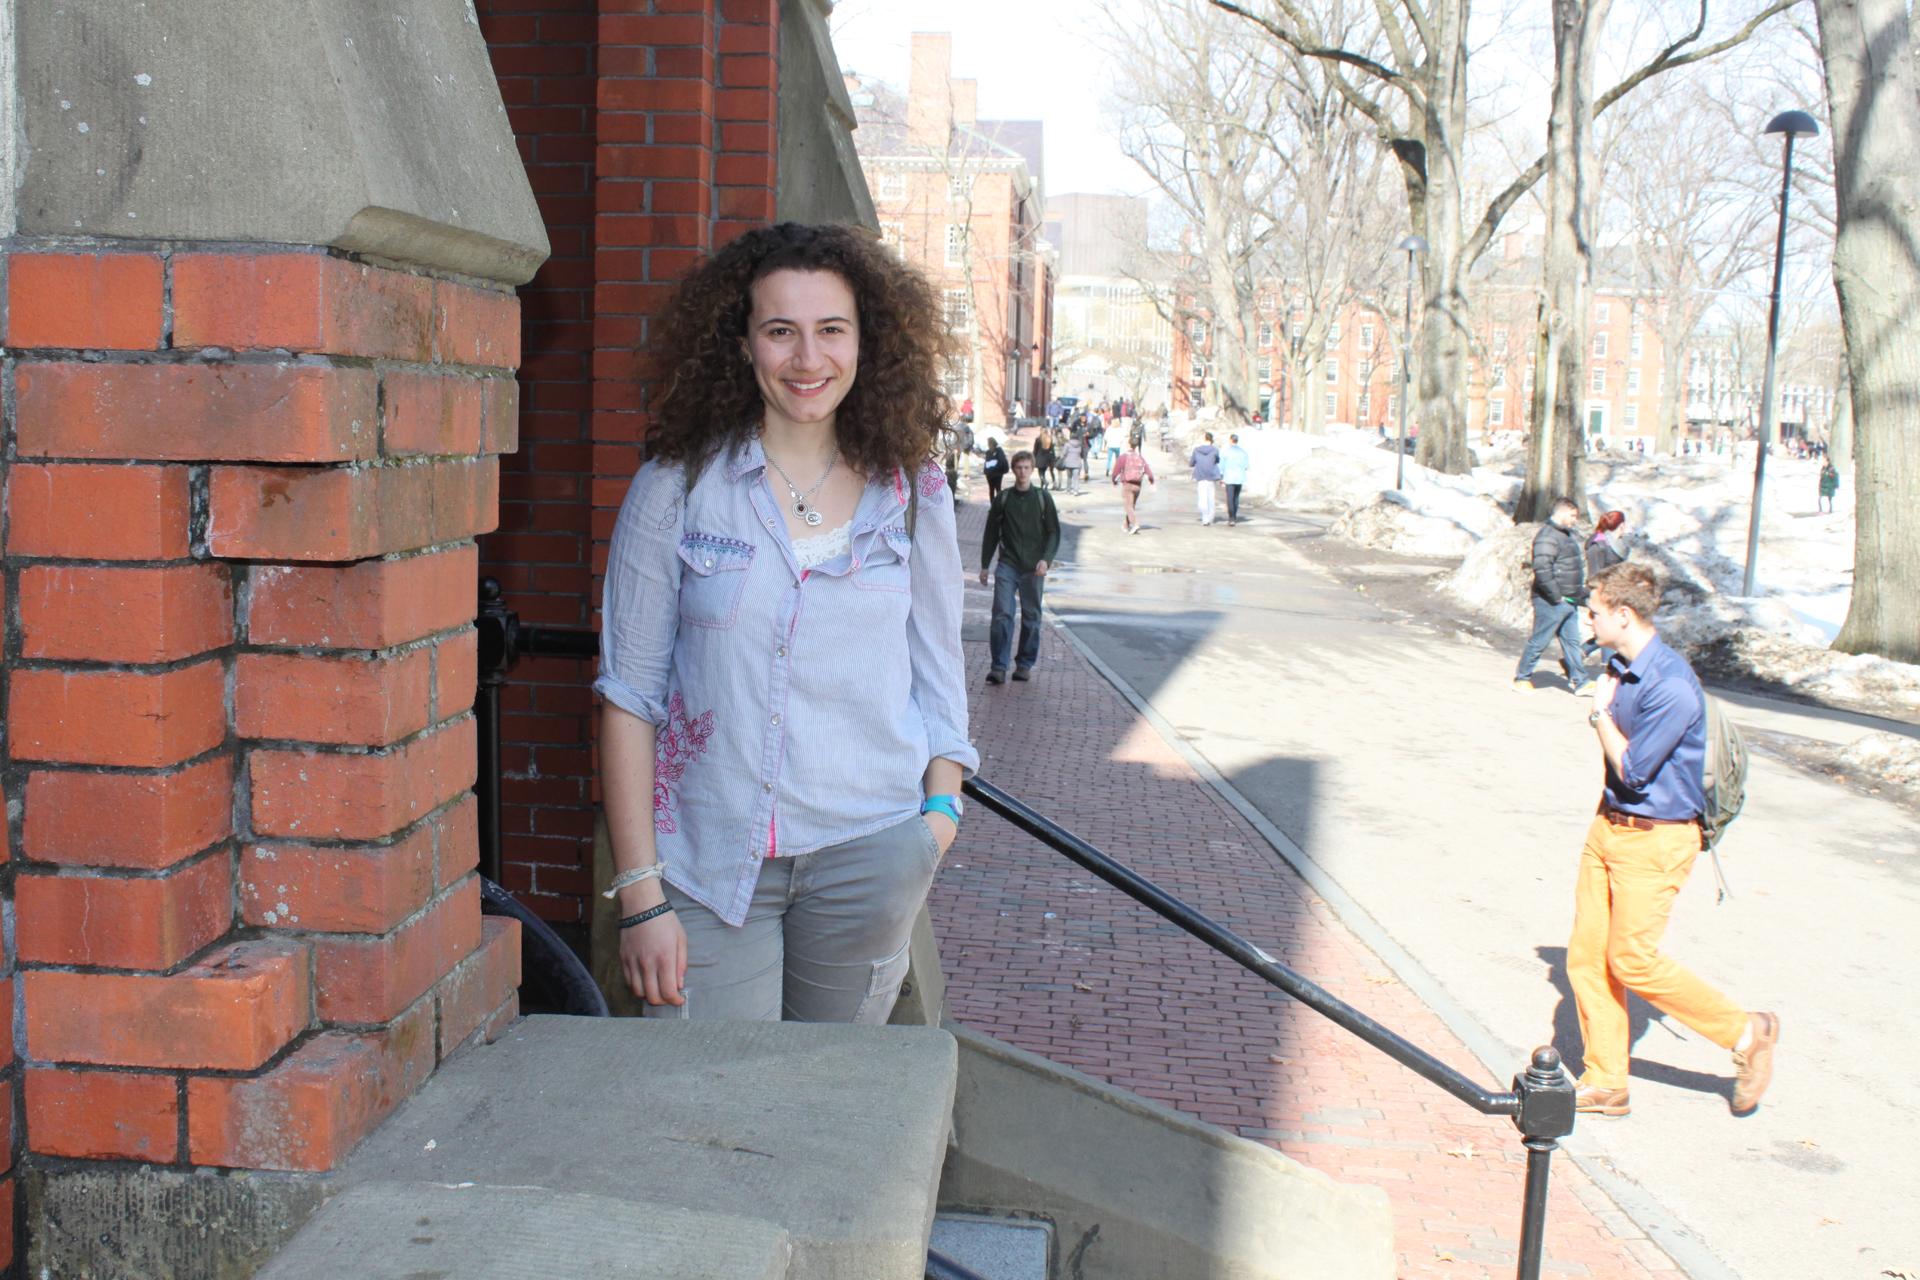 Divest Harvard Co-Founder Chloe Maxmin became an activist at age 12